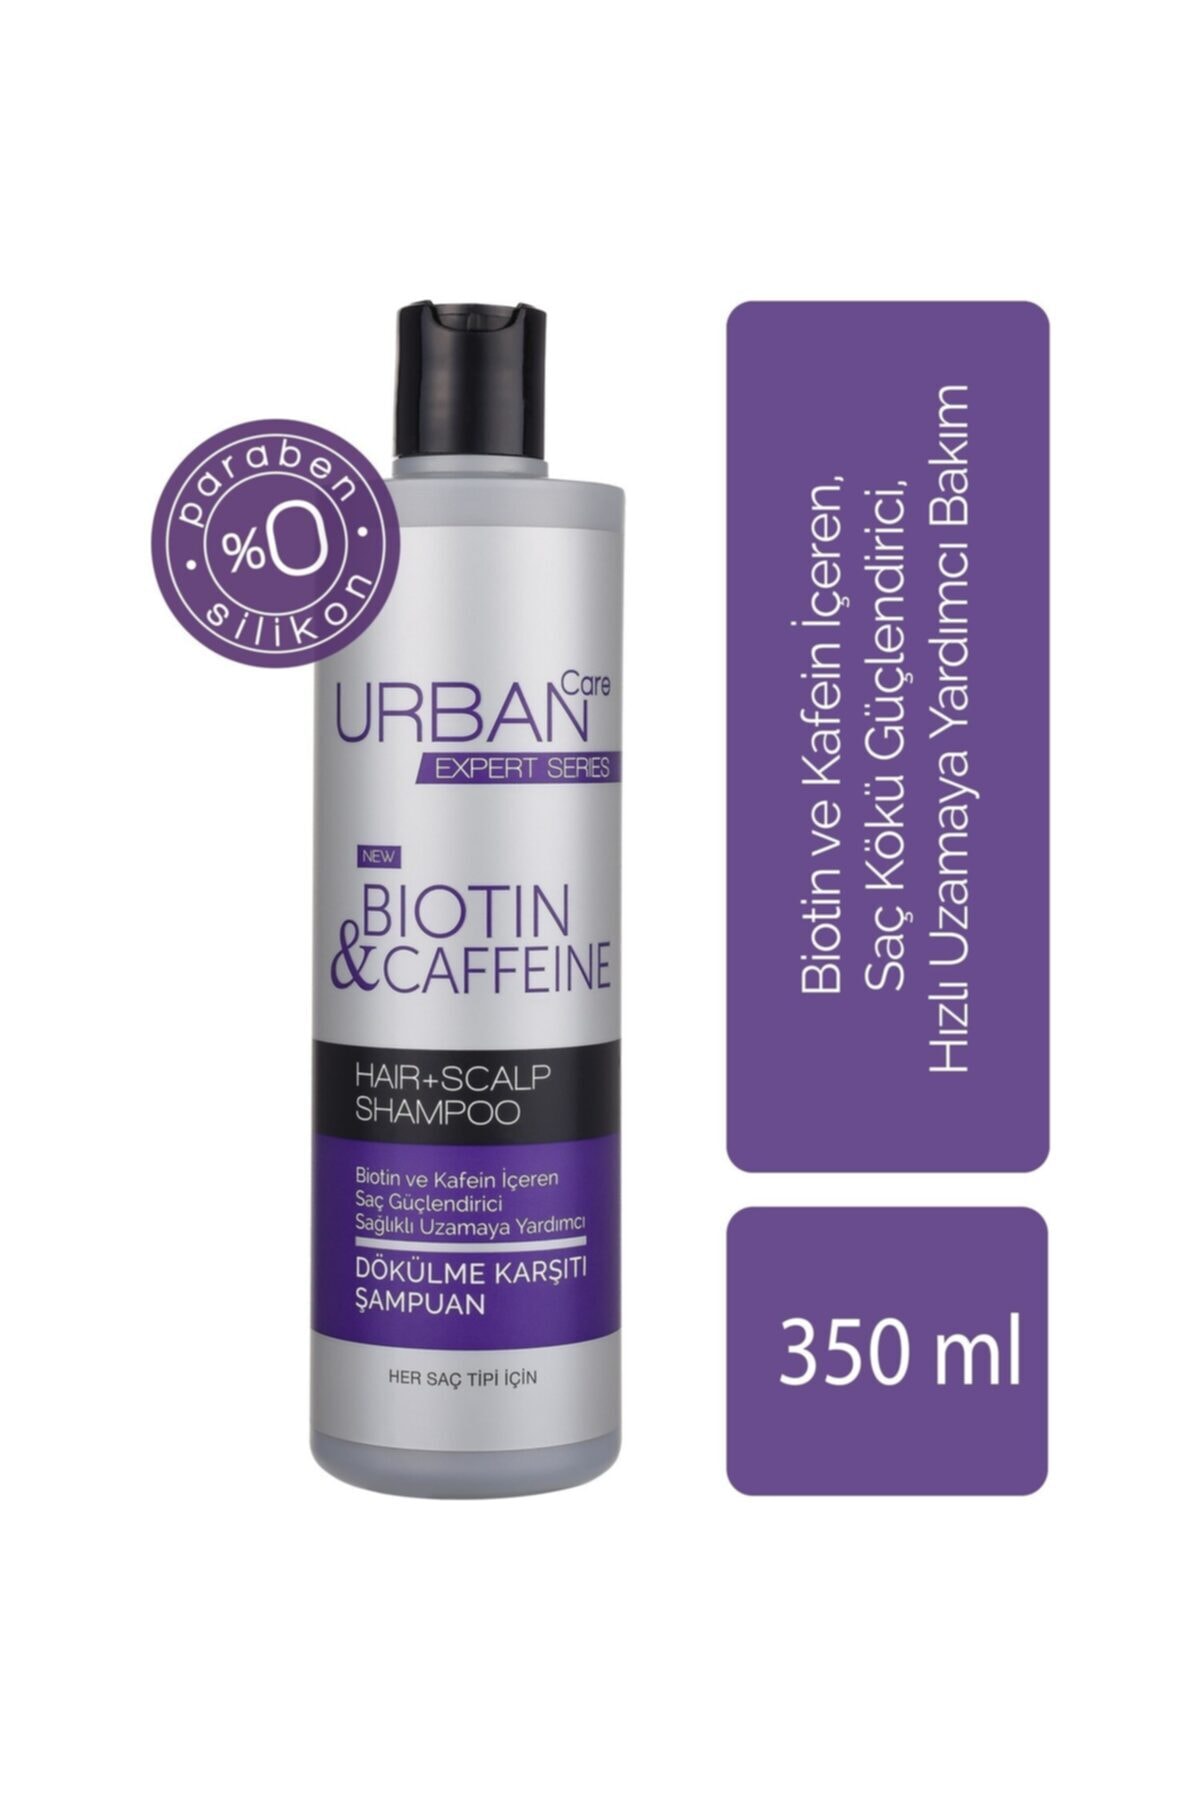 Urban Care Expert Biotin & Caffeine Shampoo 350 ml